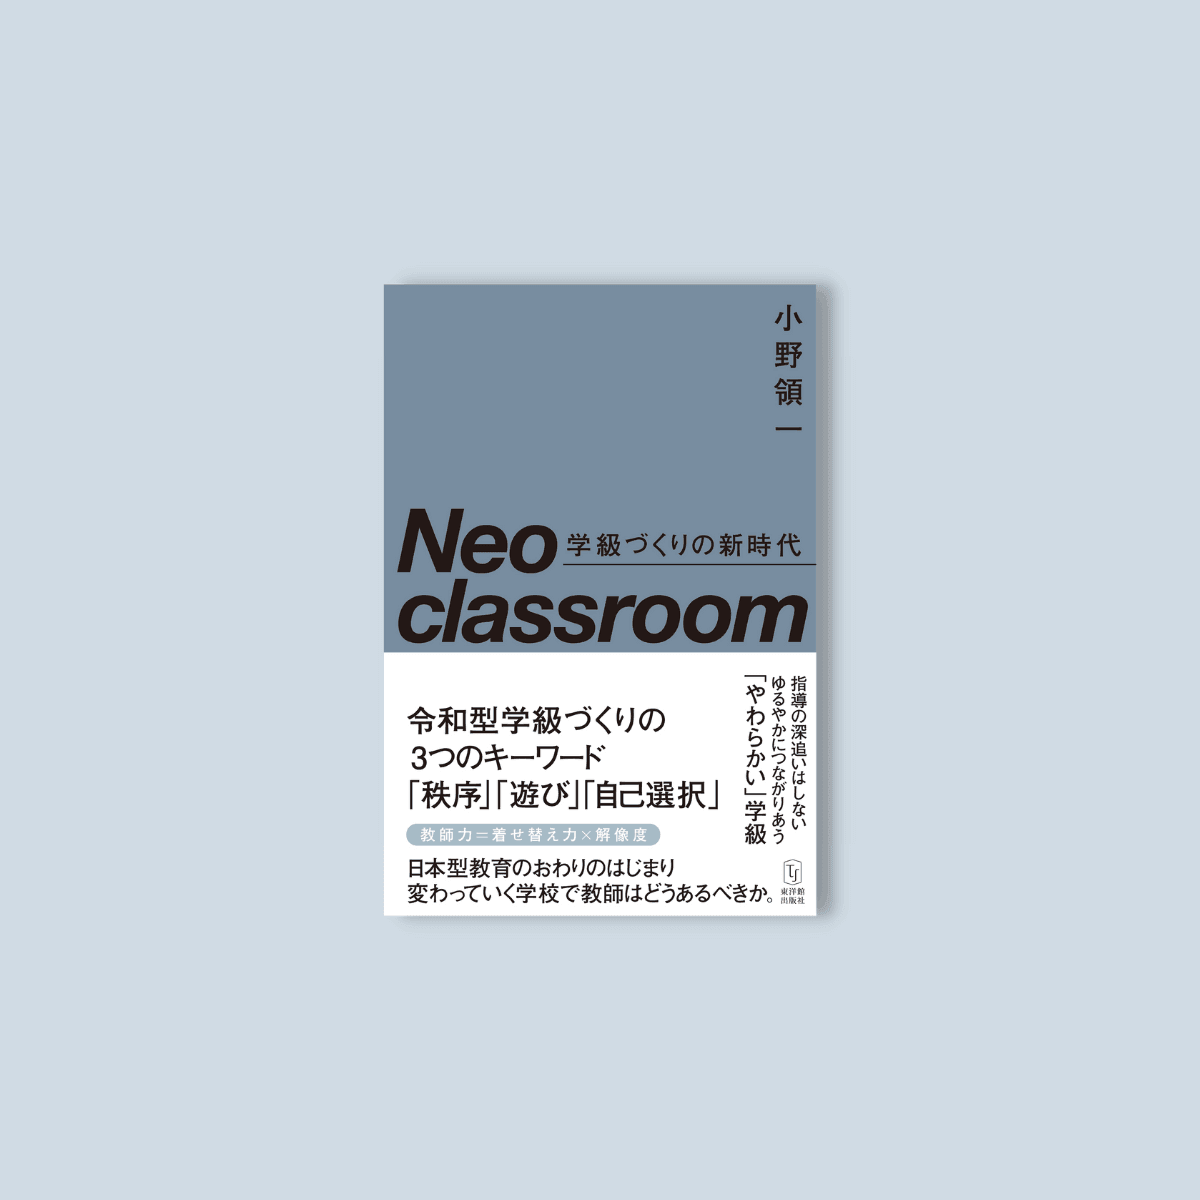 Neo classroom 学級づくりの新時代 - 東洋館出版社